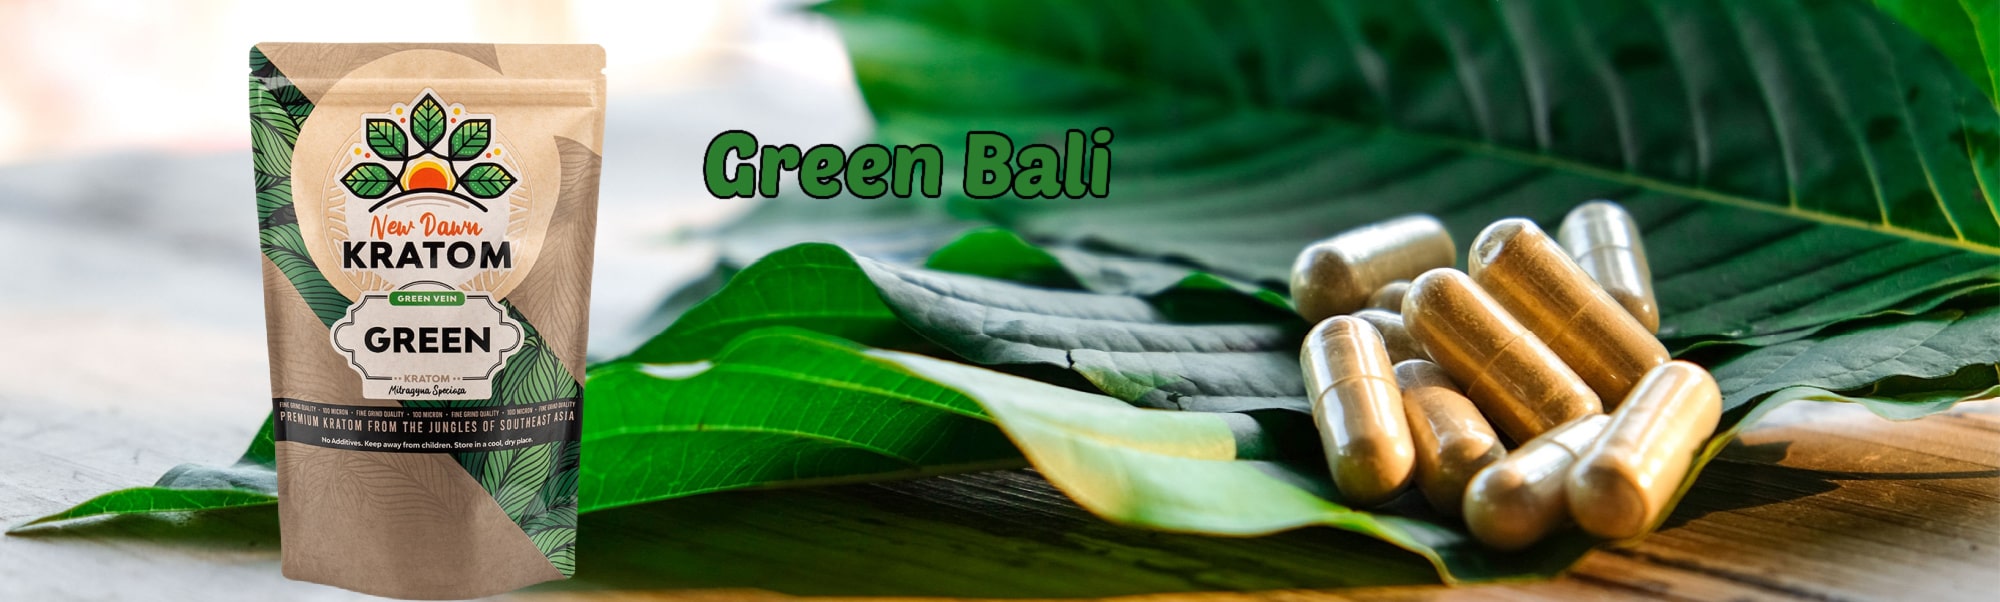 image of green bali strain